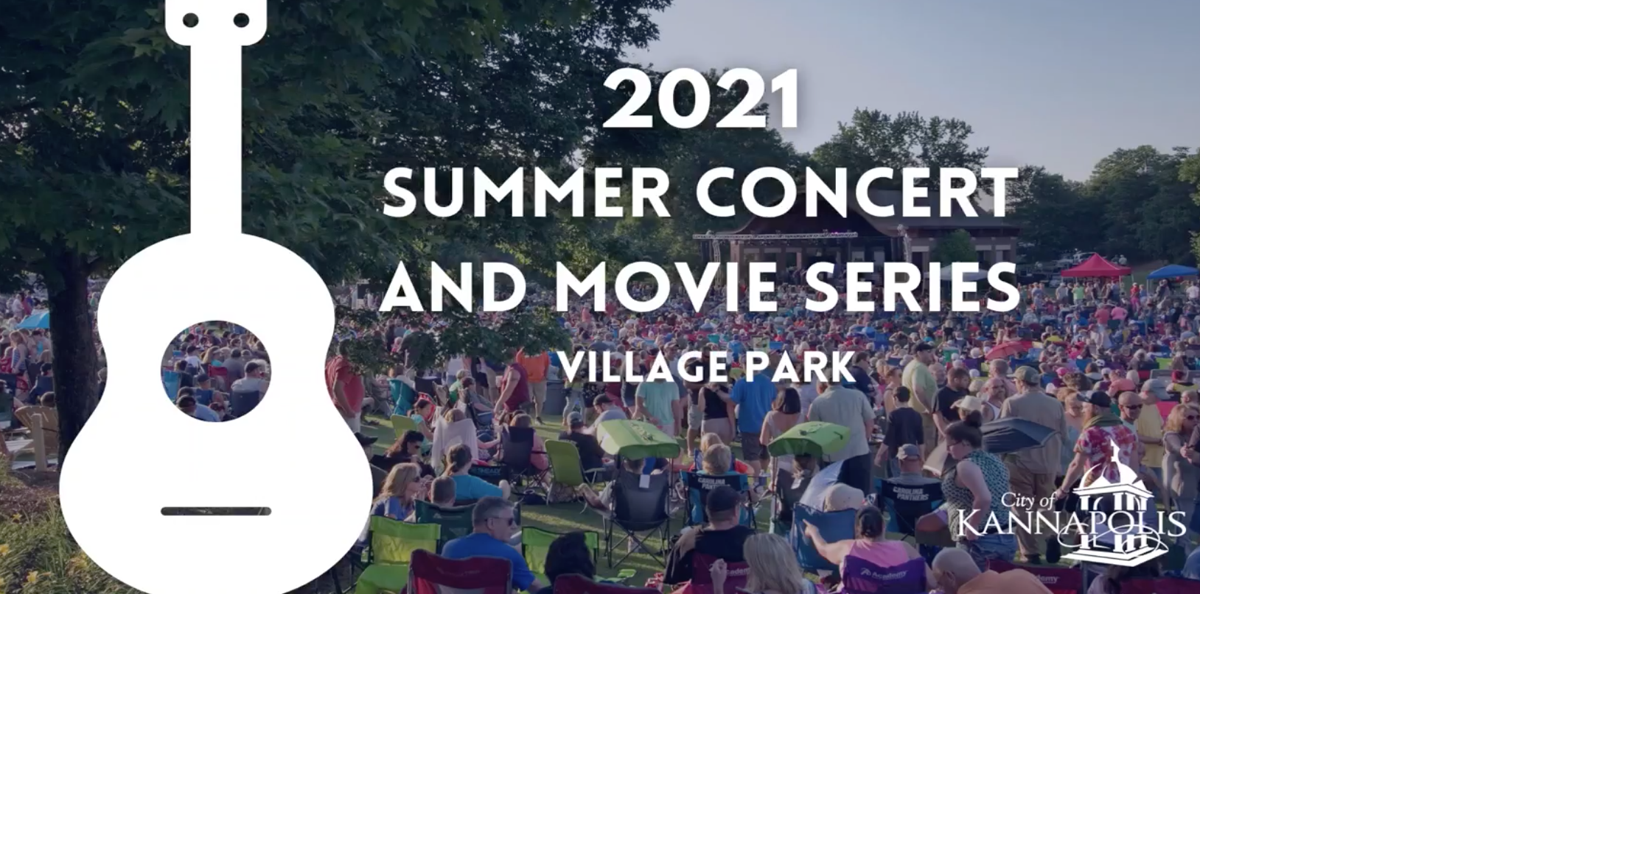 Kannapolis summer concert & movie series is back